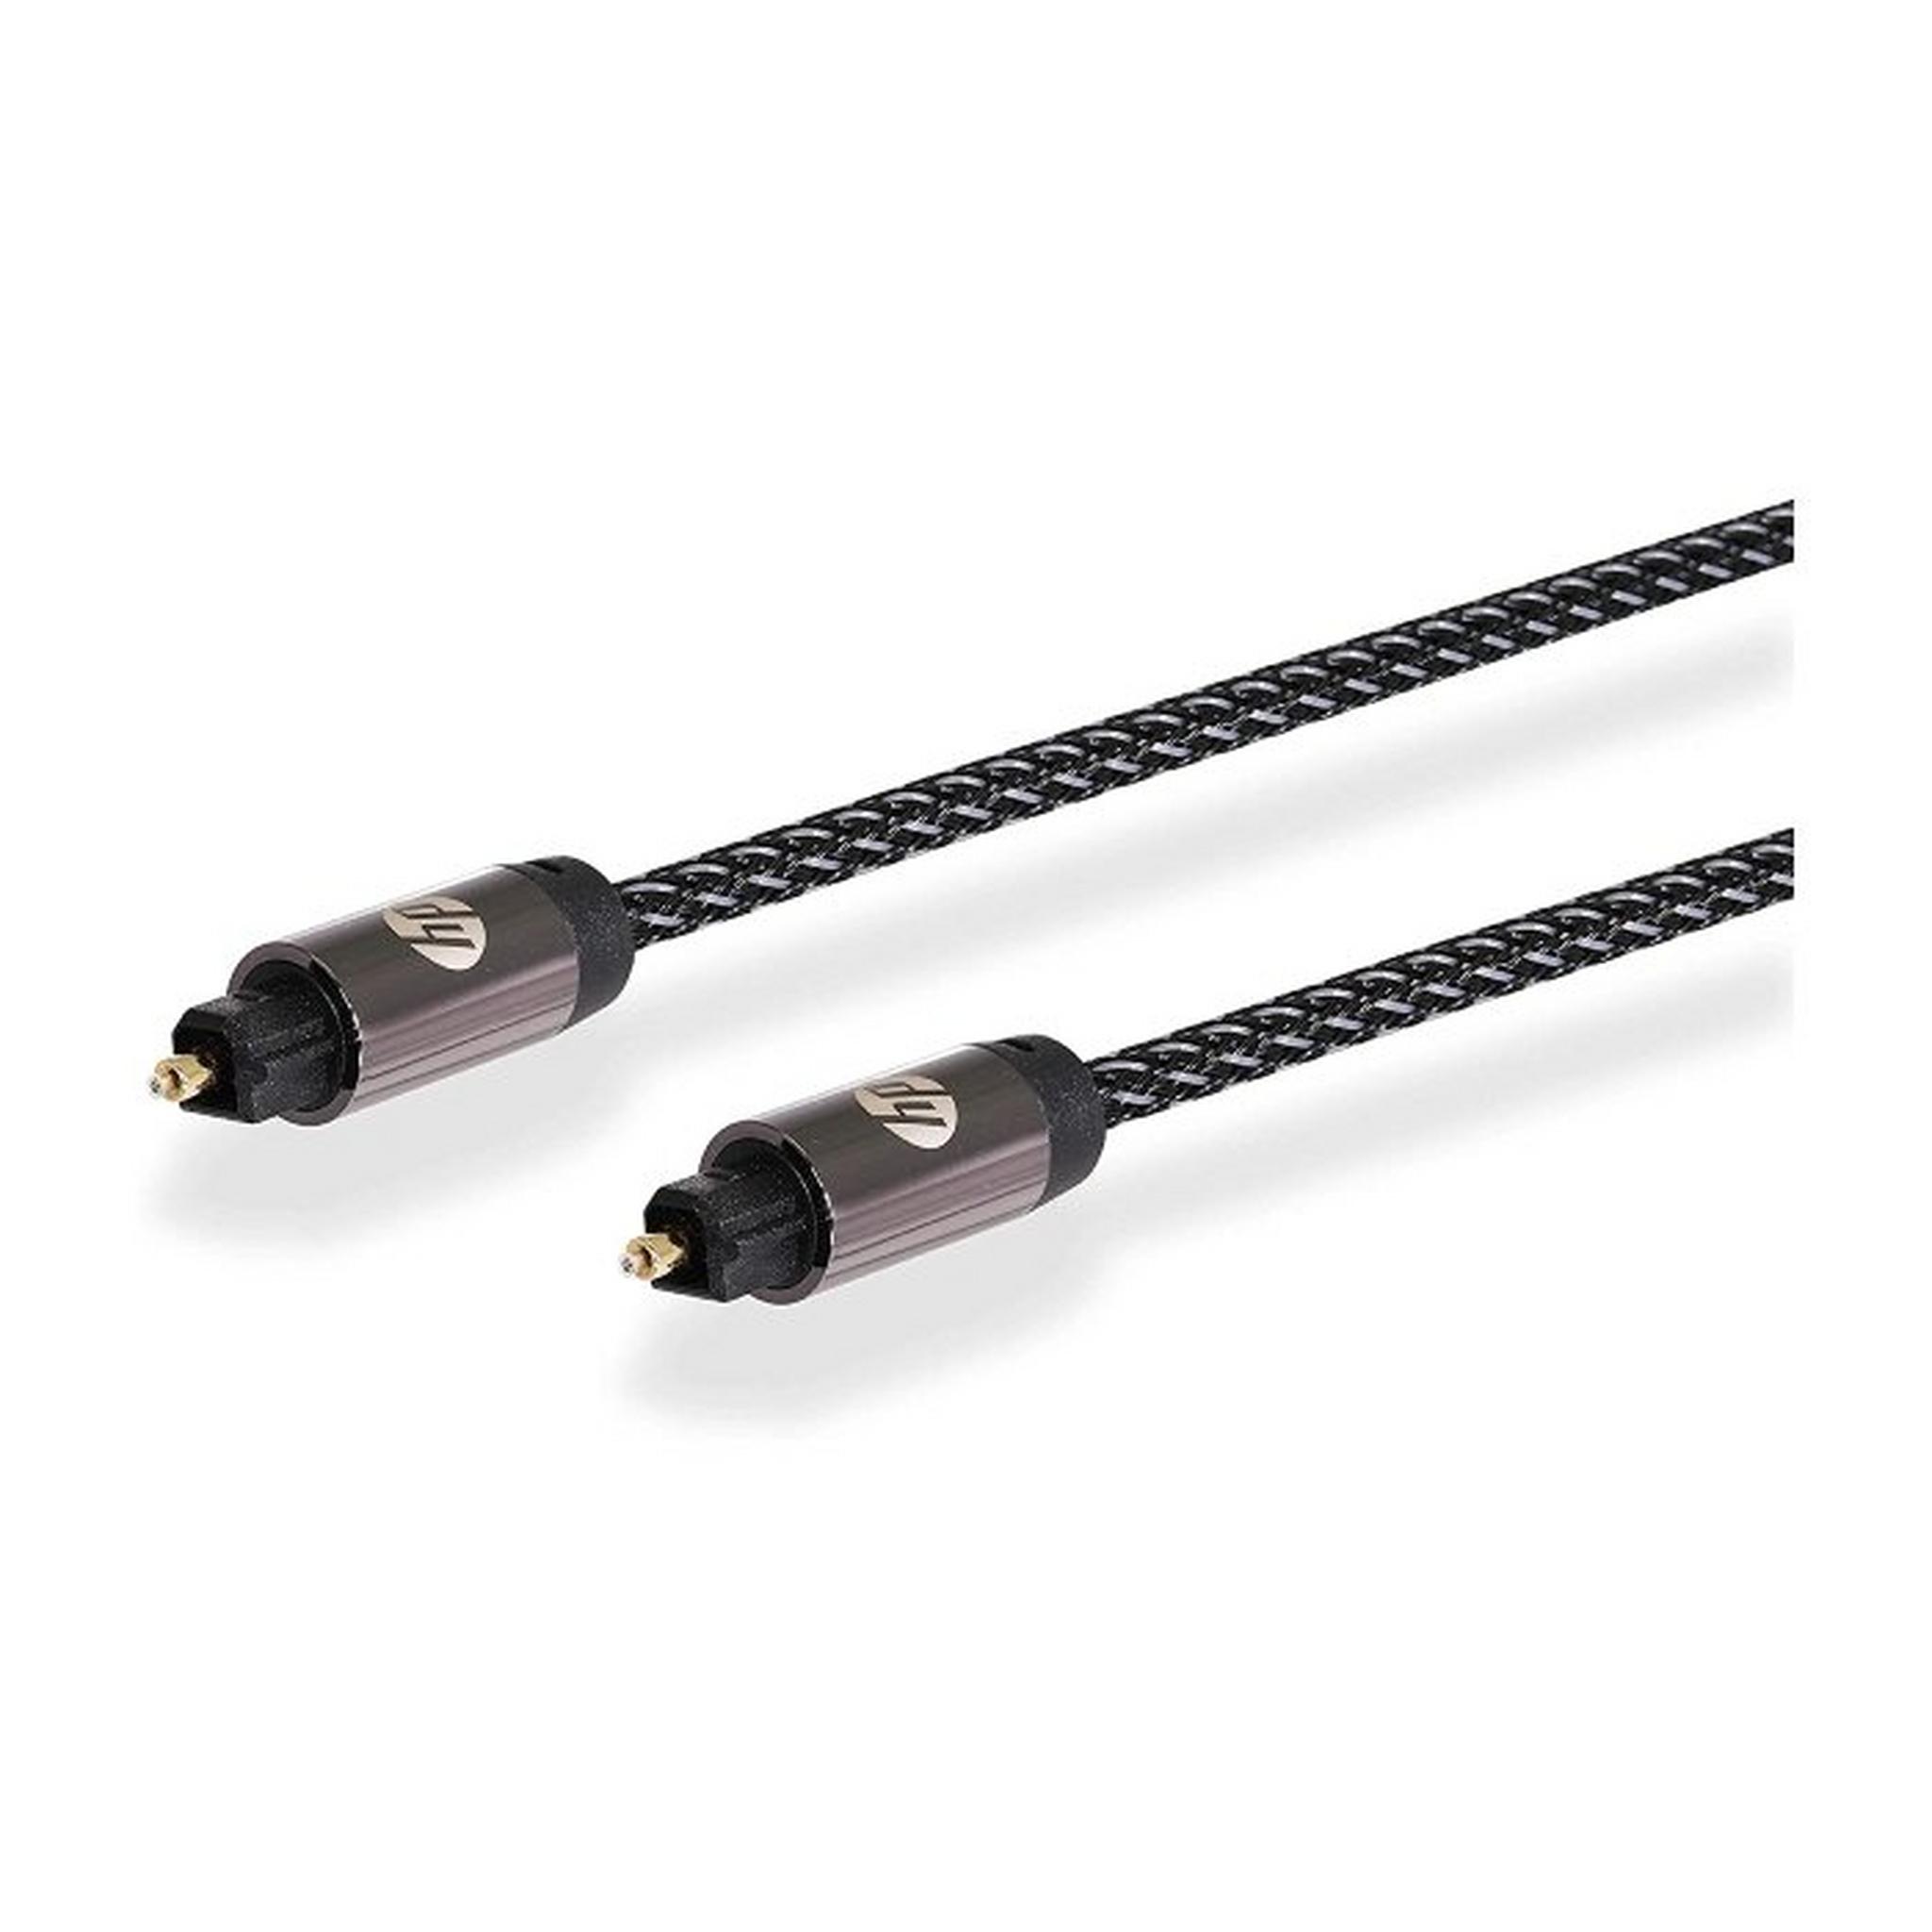 HP TOSLink Fiber Optic Cable 3-Meters - Black